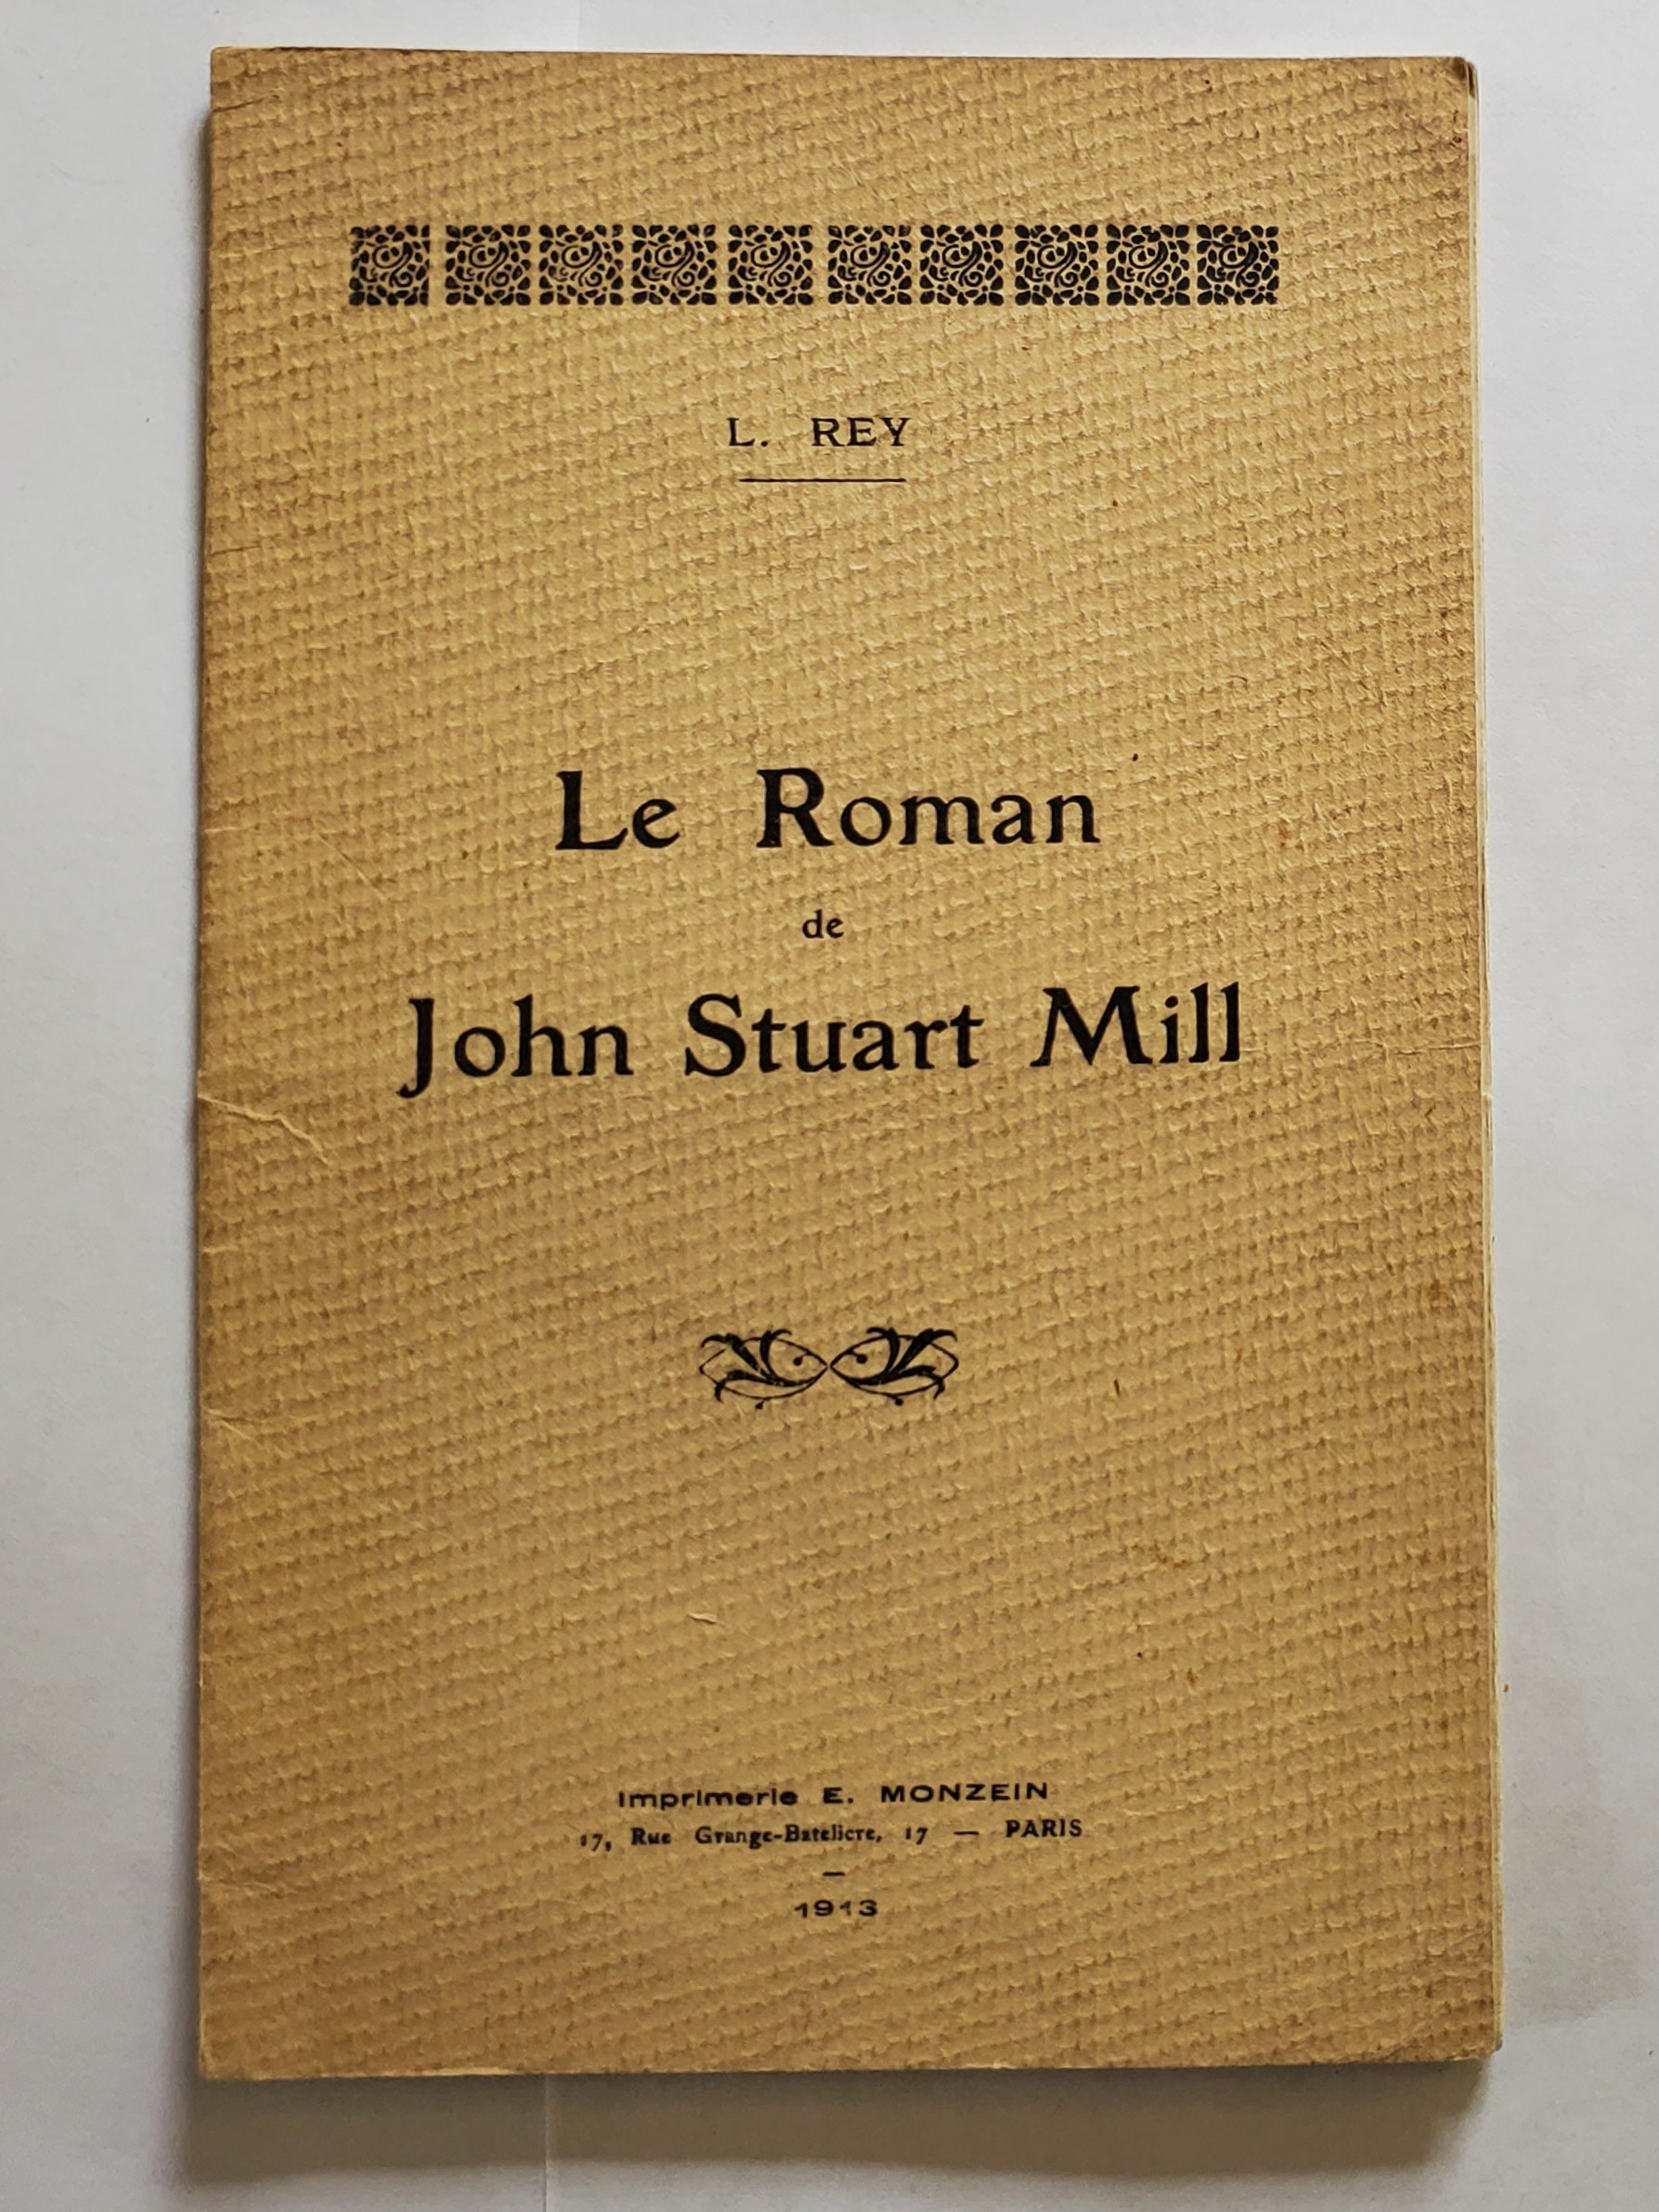 Louis REY. Le Roman de John Stuart Mill